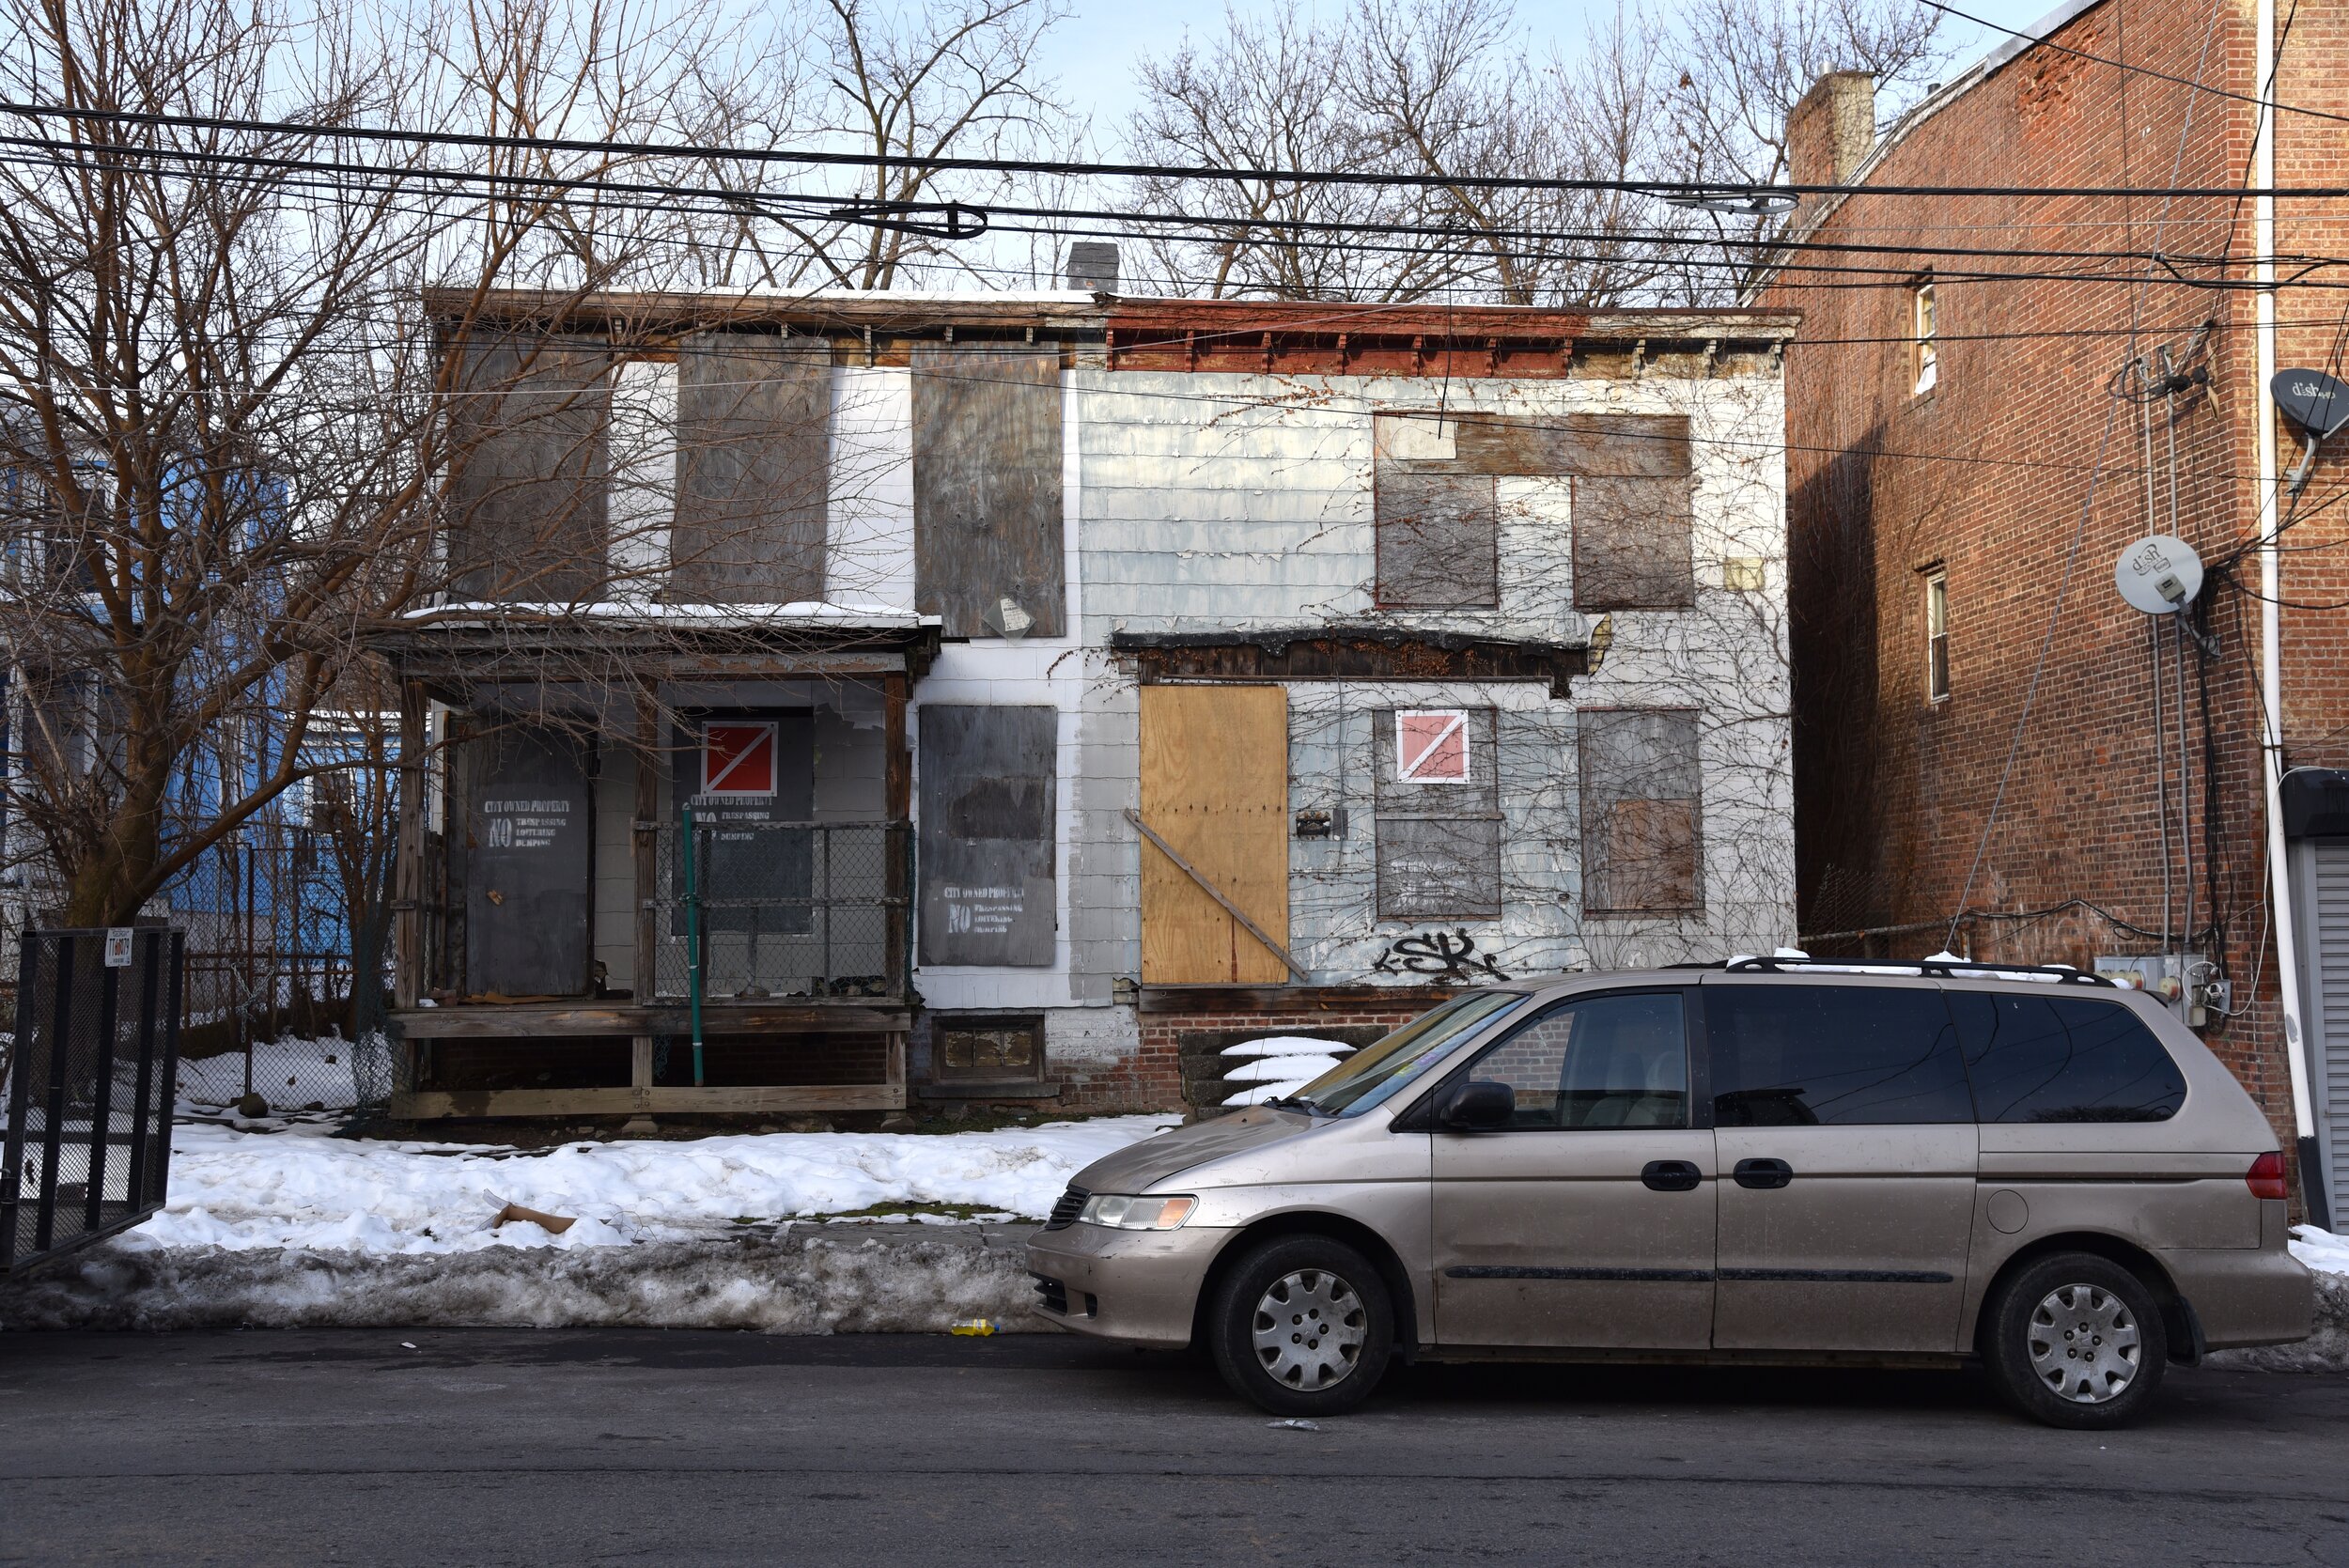 2020 Grey Minivan With Abandoned Homes - Newburgh NY T.JPG